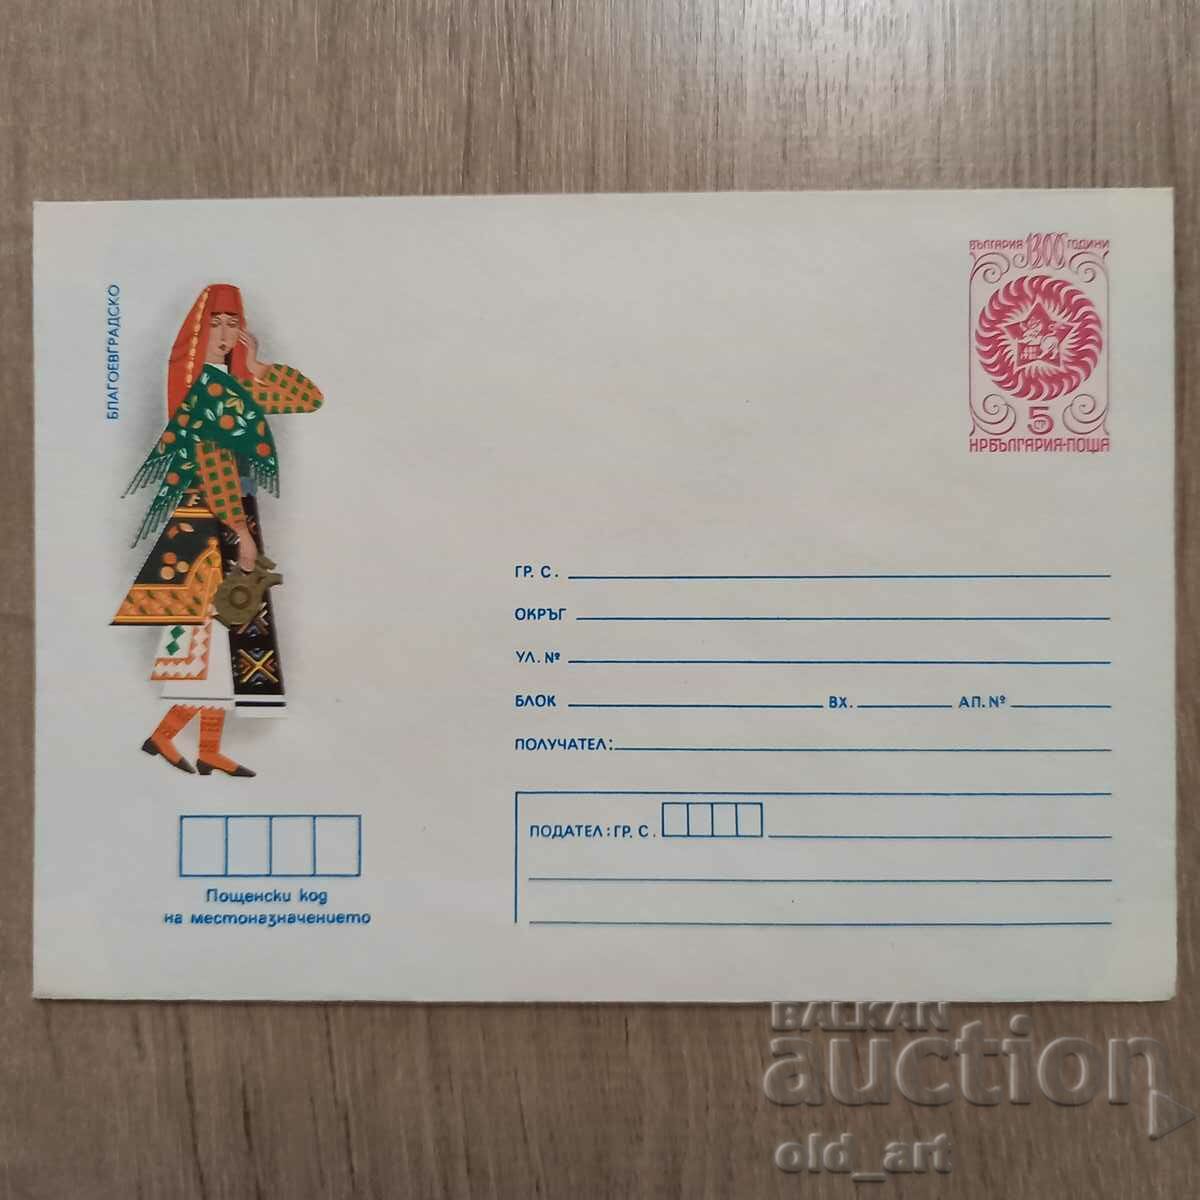 Postal envelope - Folk costumes - Blagoevgradsko